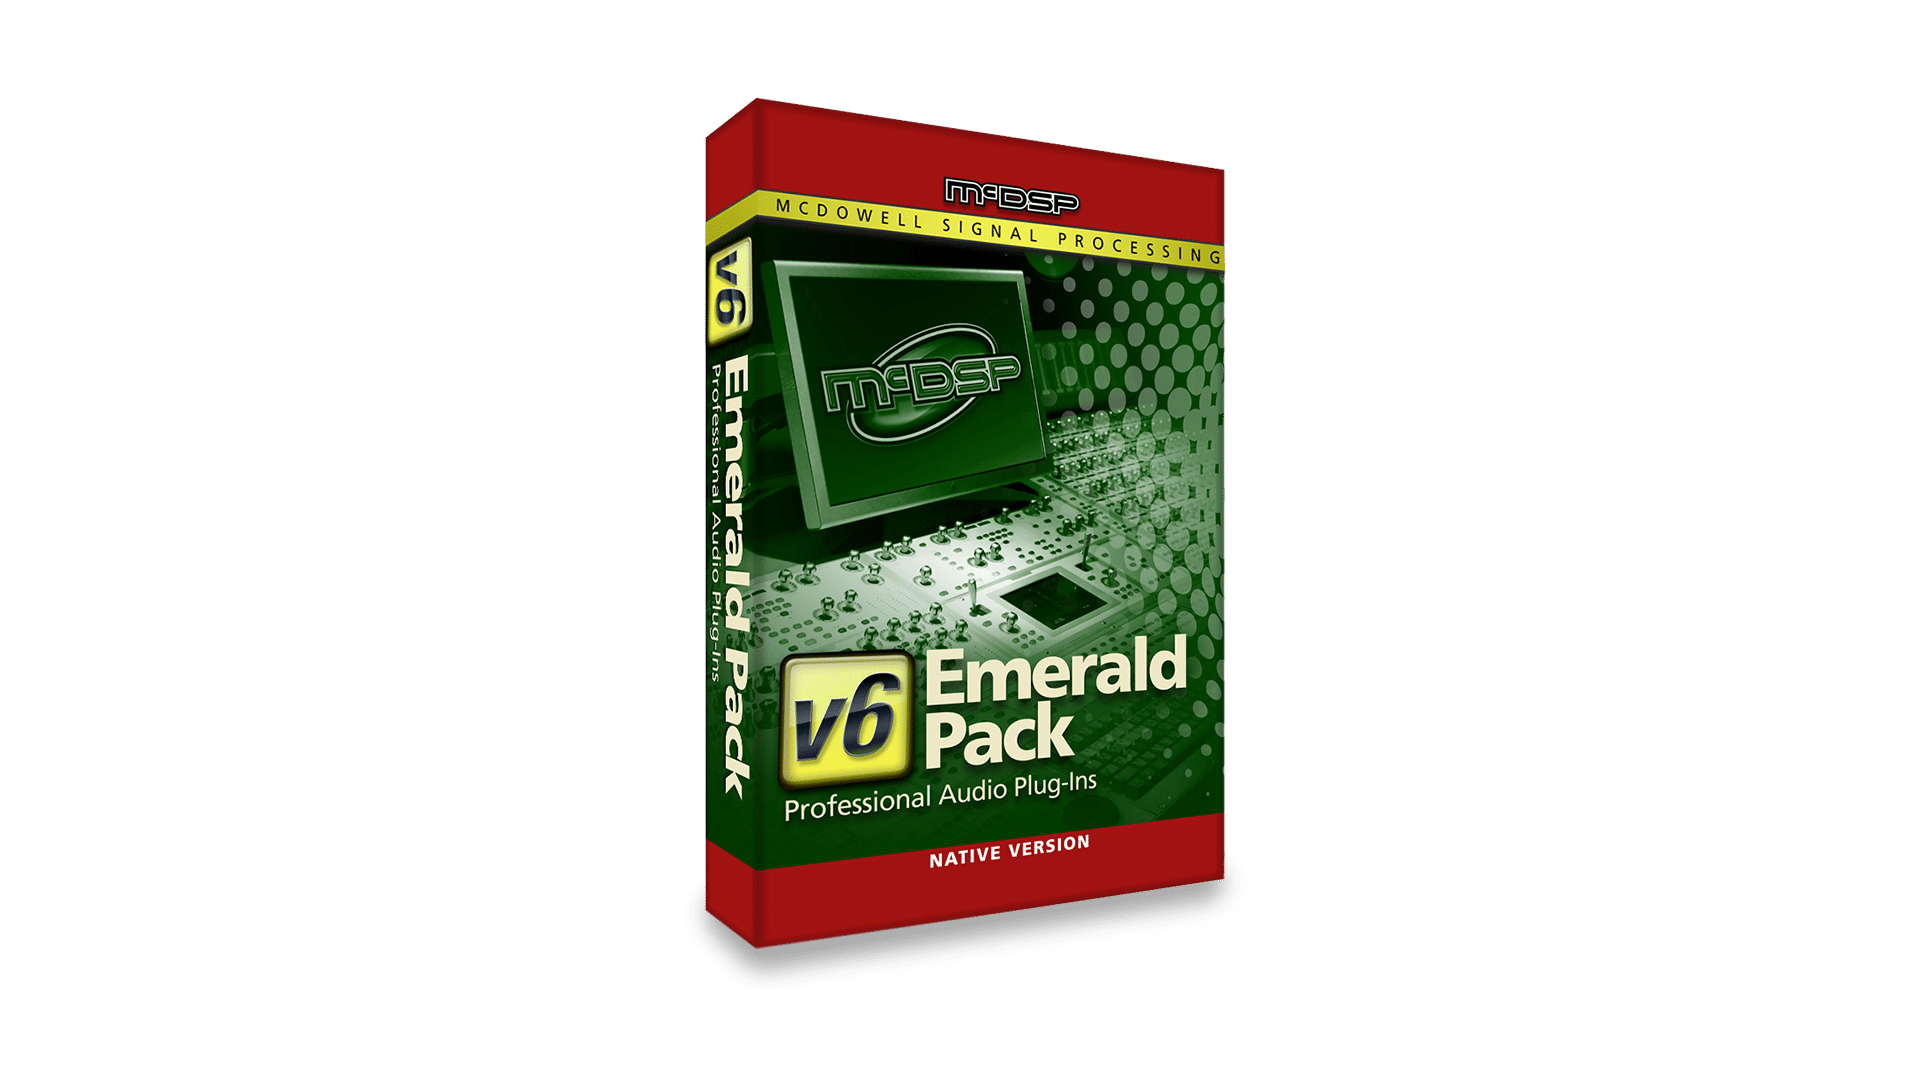 mcdsp emerald pack